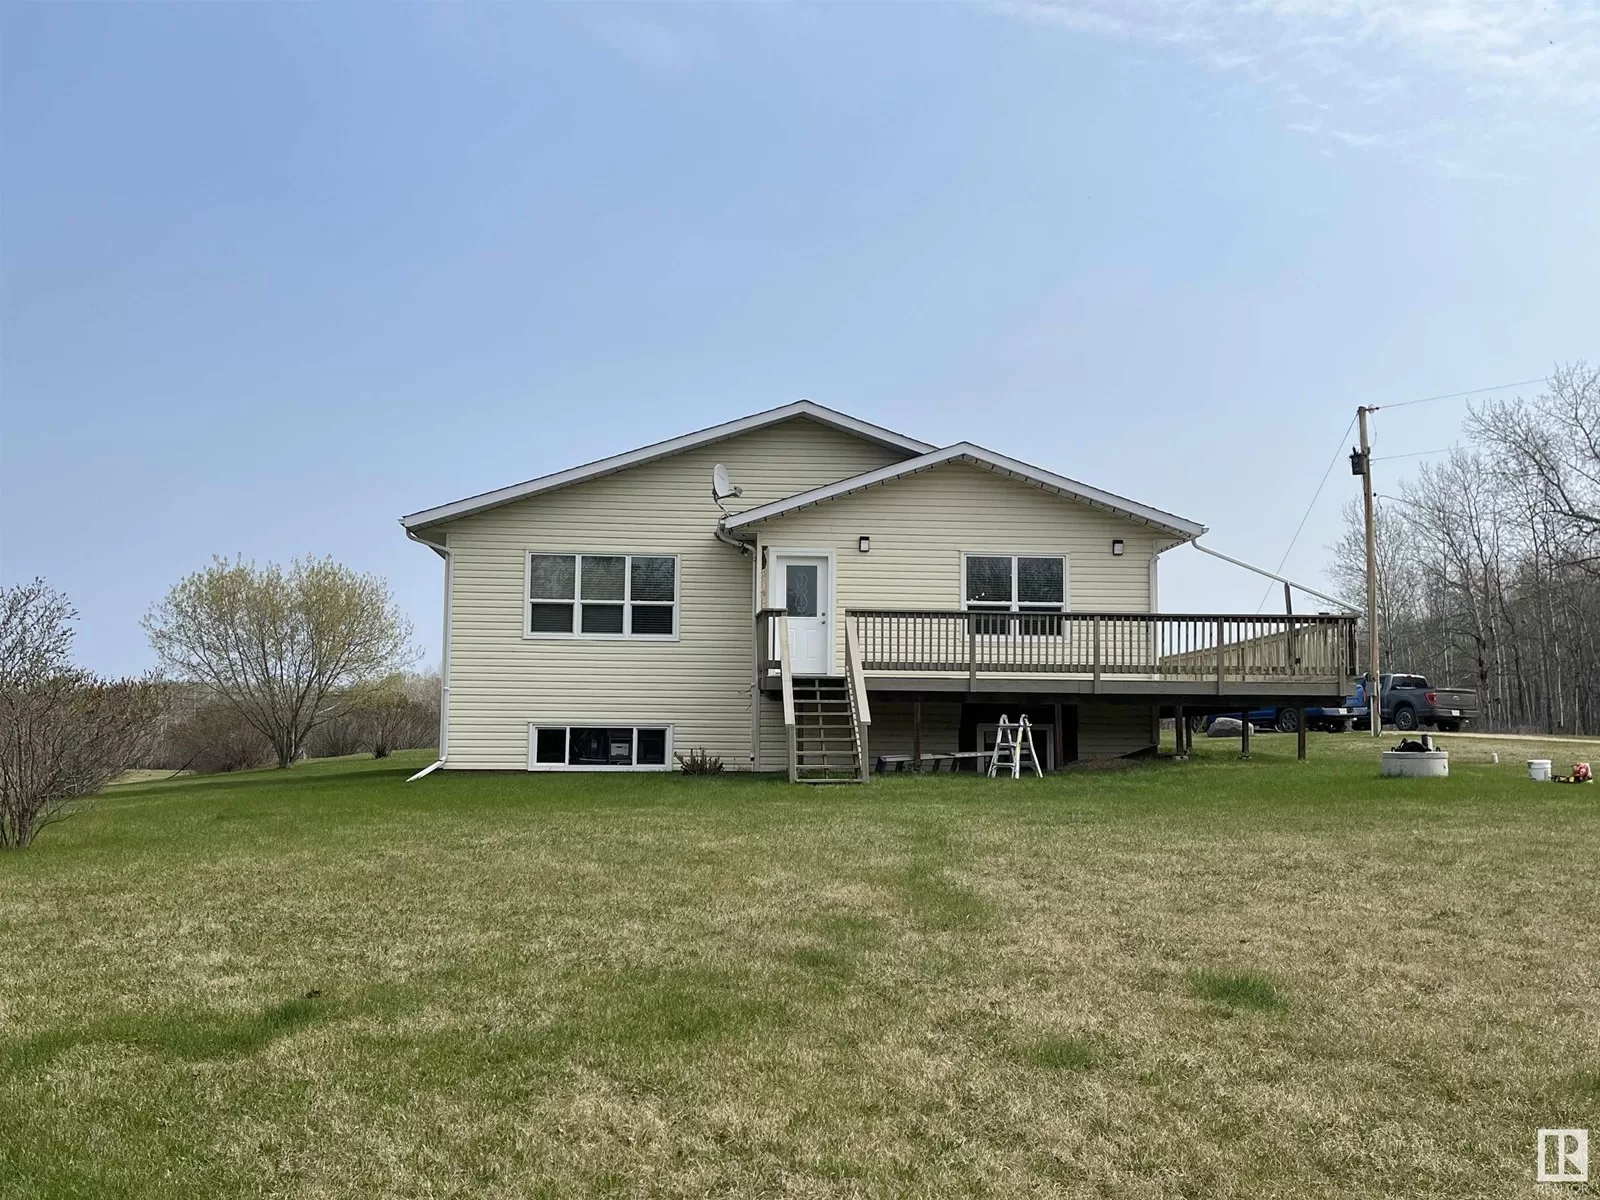 House for rent: 41216 Twp Rd 615, Rural Bonnyville M.D., Alberta T0A 0T0